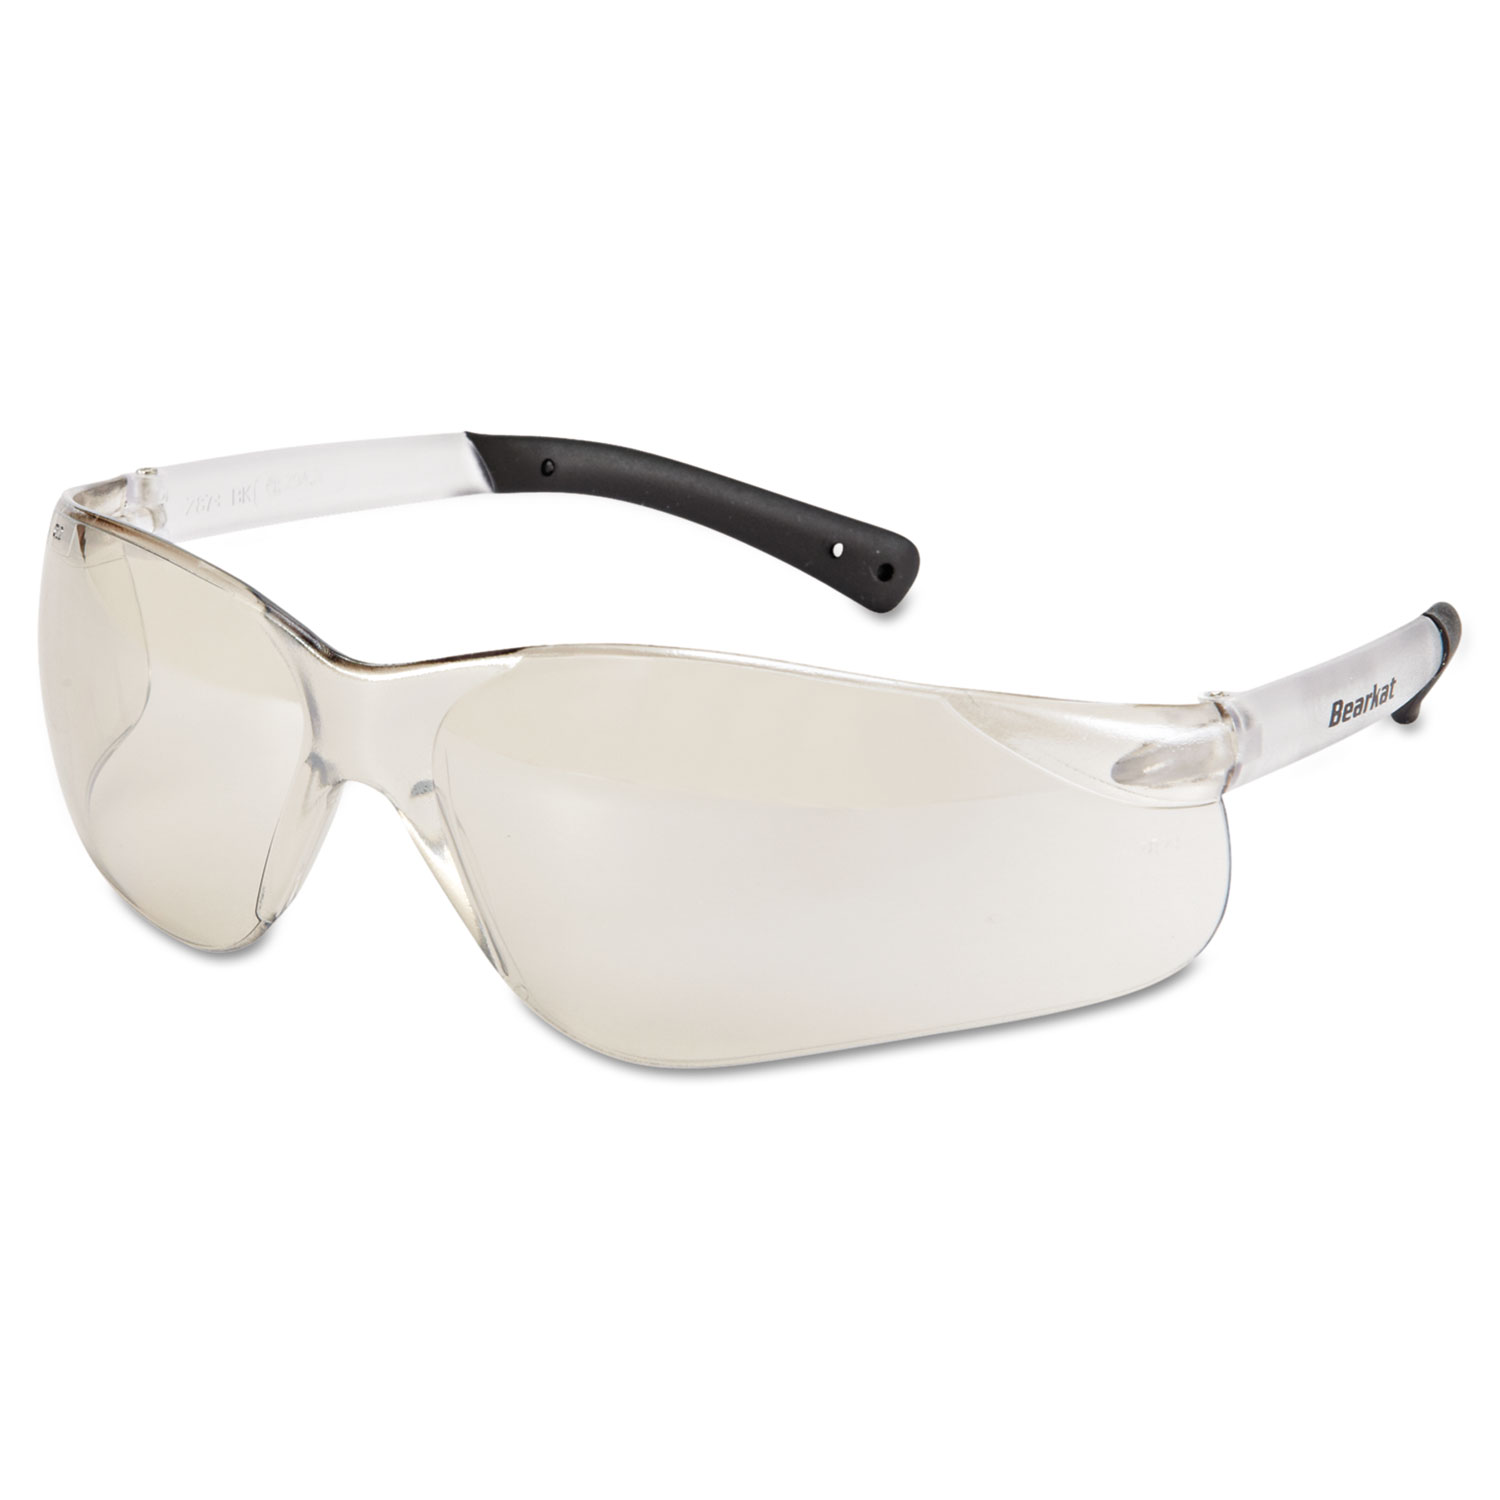  MCR Safety BK119 BearKat Safety Glasses, Frost Frame, Clear Mirror Lens (CRWBK119) 